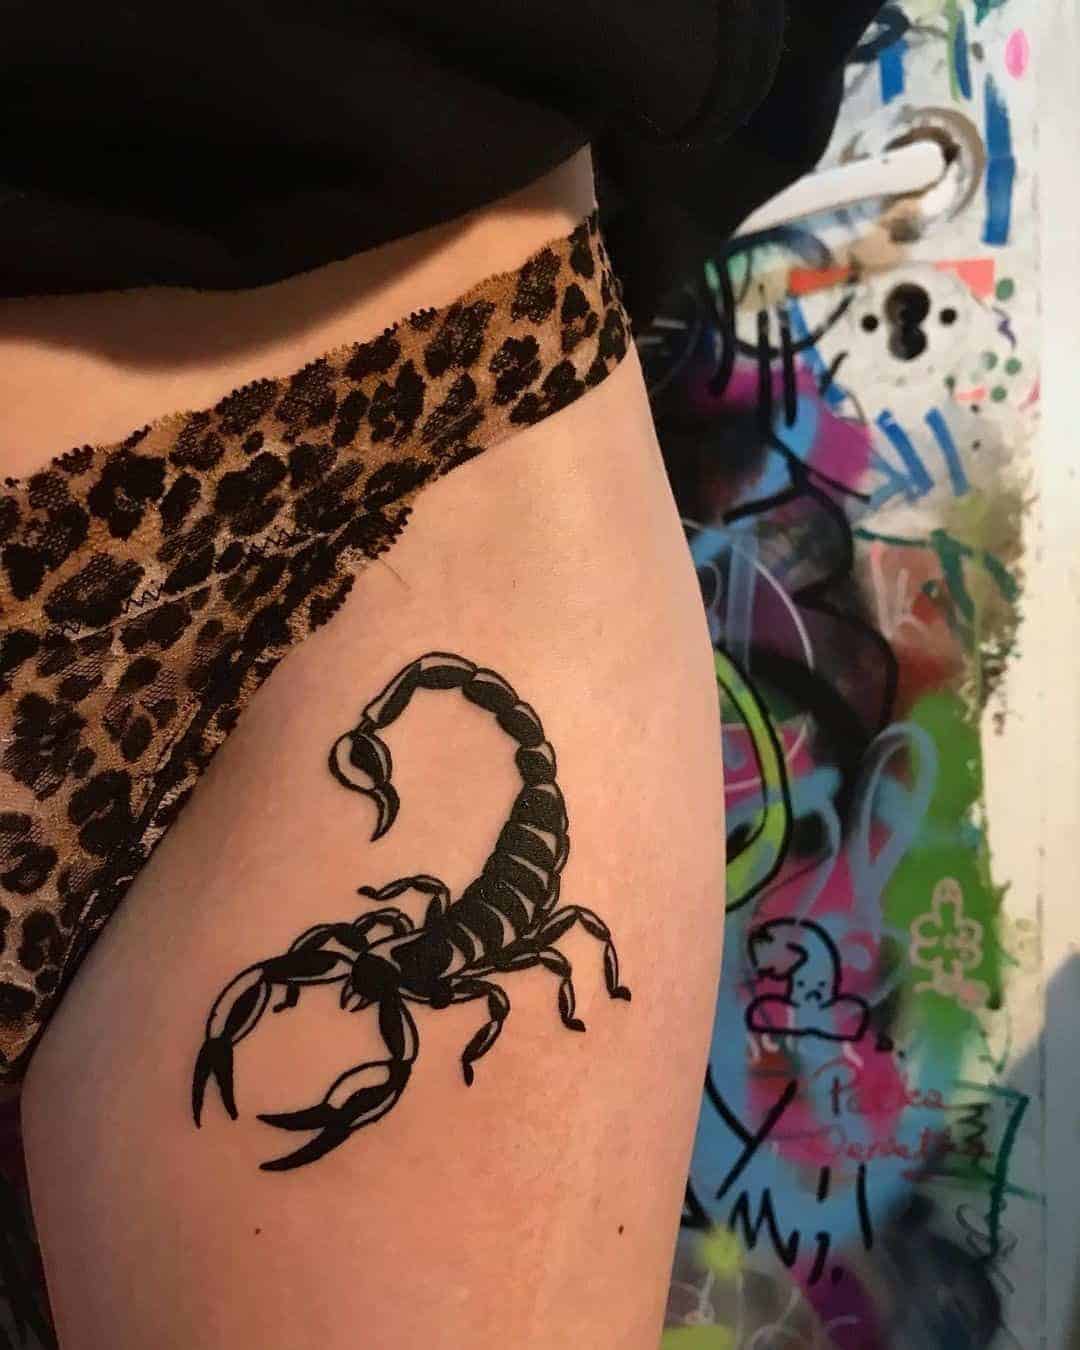 scorpion thigh tattoo